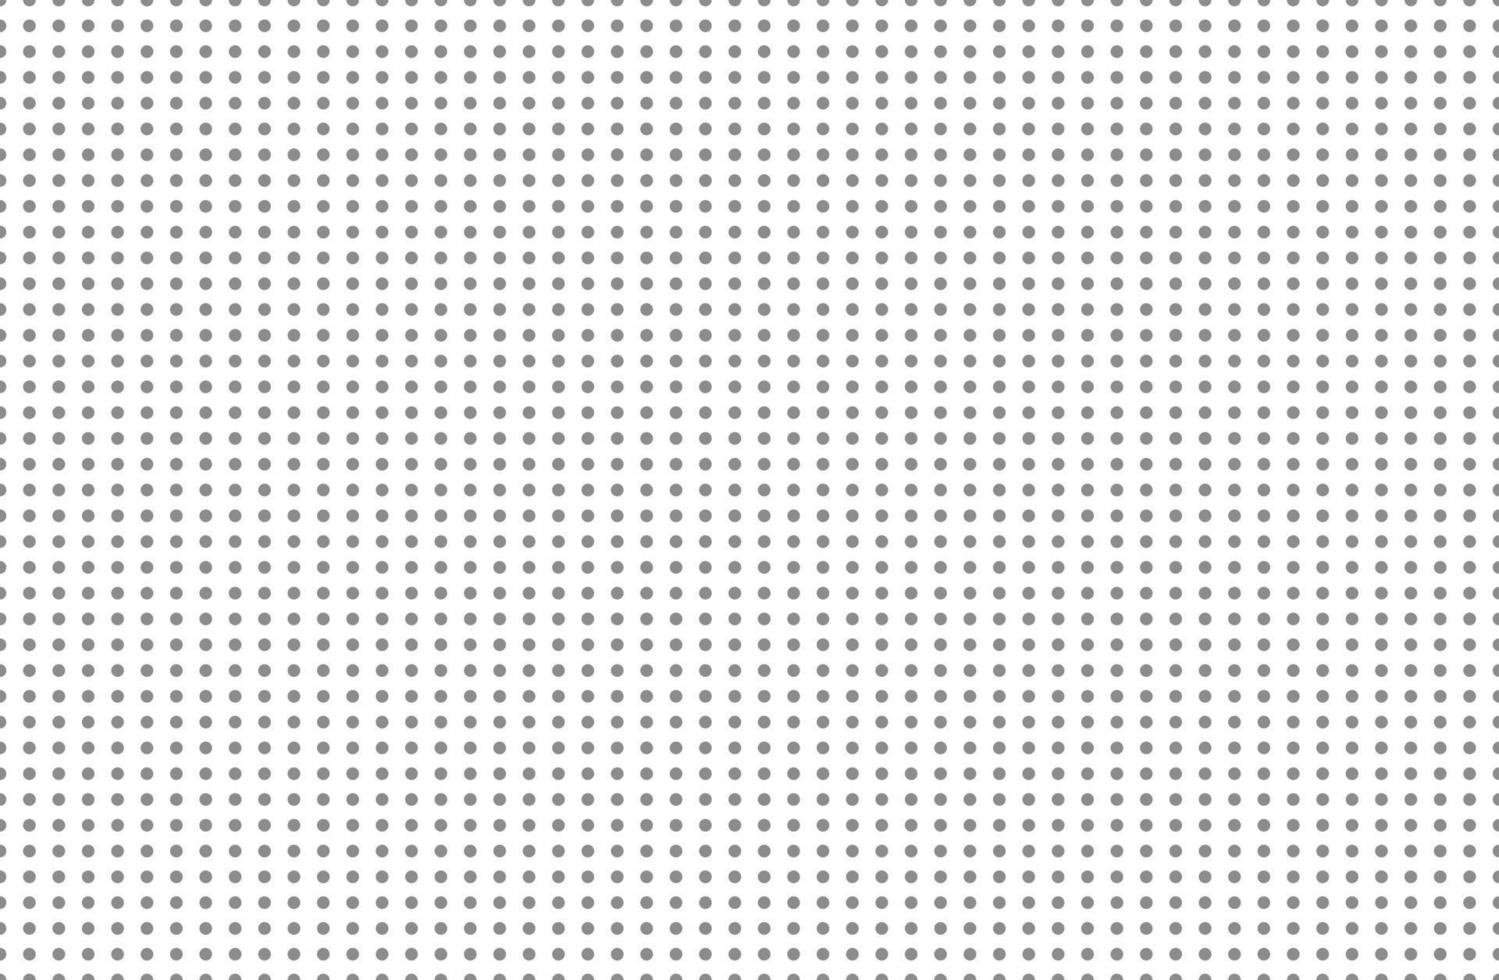 Polka dot pattern background vector